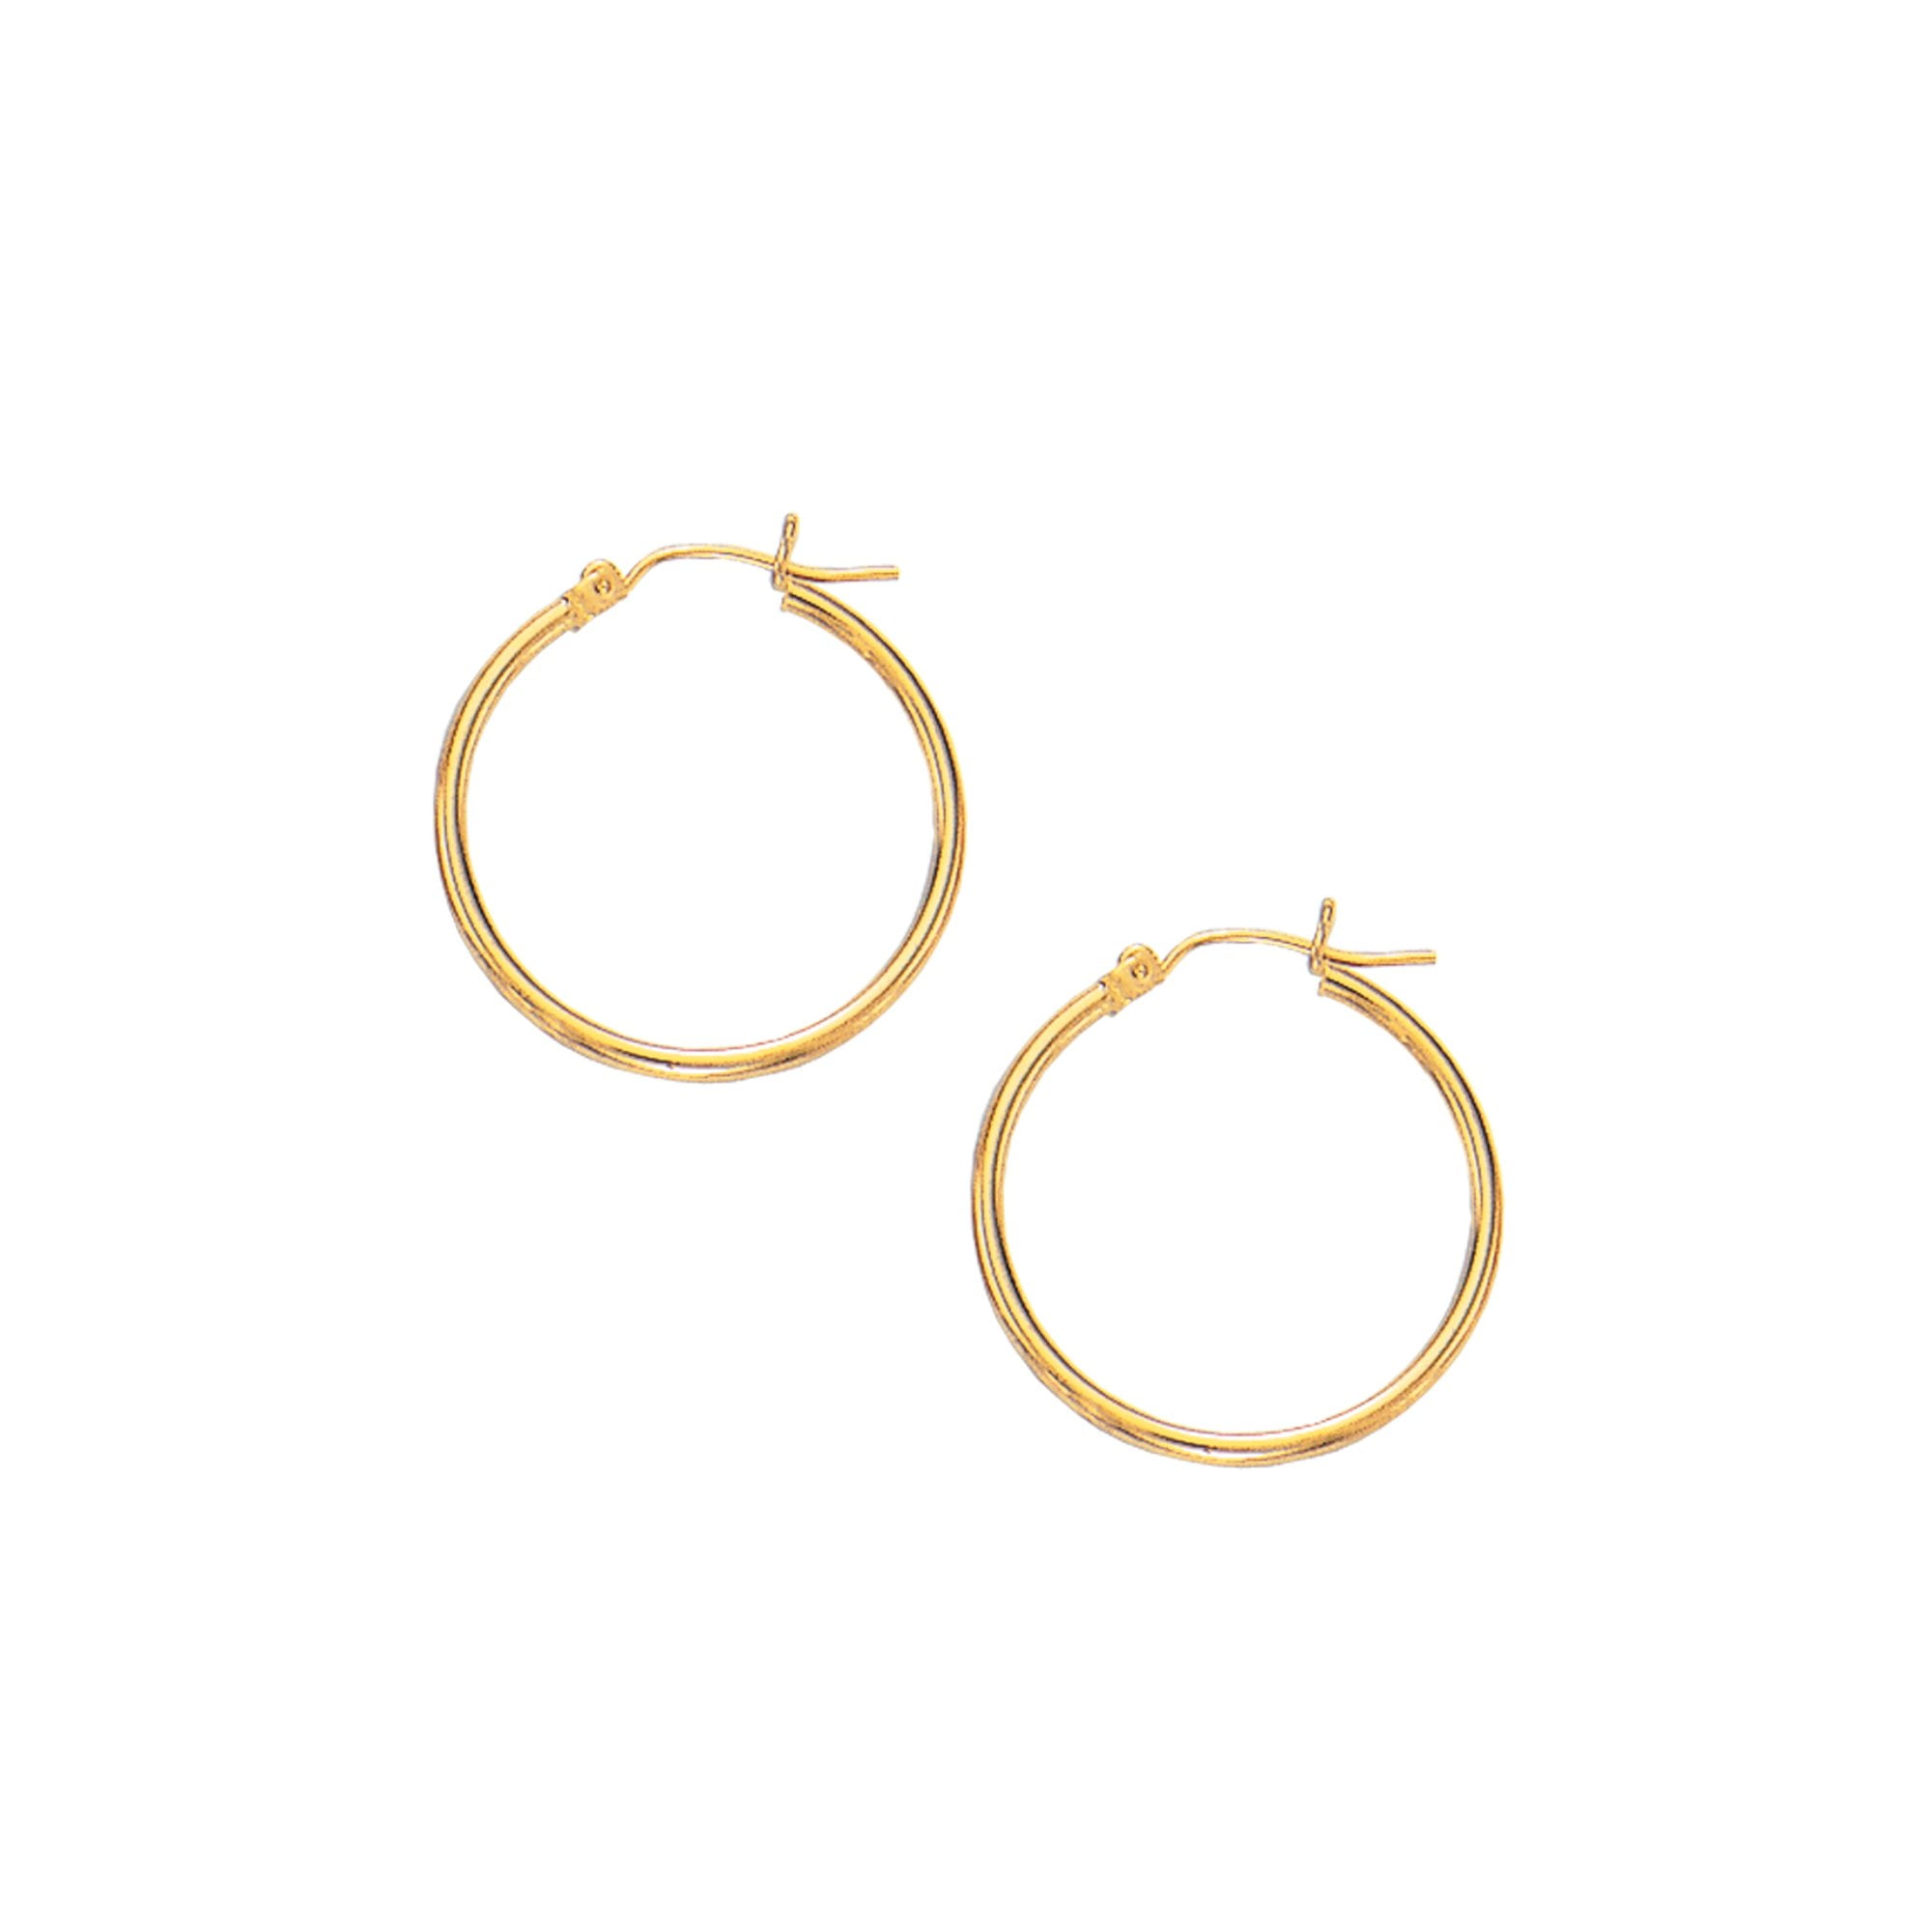 0.35 in x 0.08 in 10k Gold Polished 2mm Round Hoop Earrings